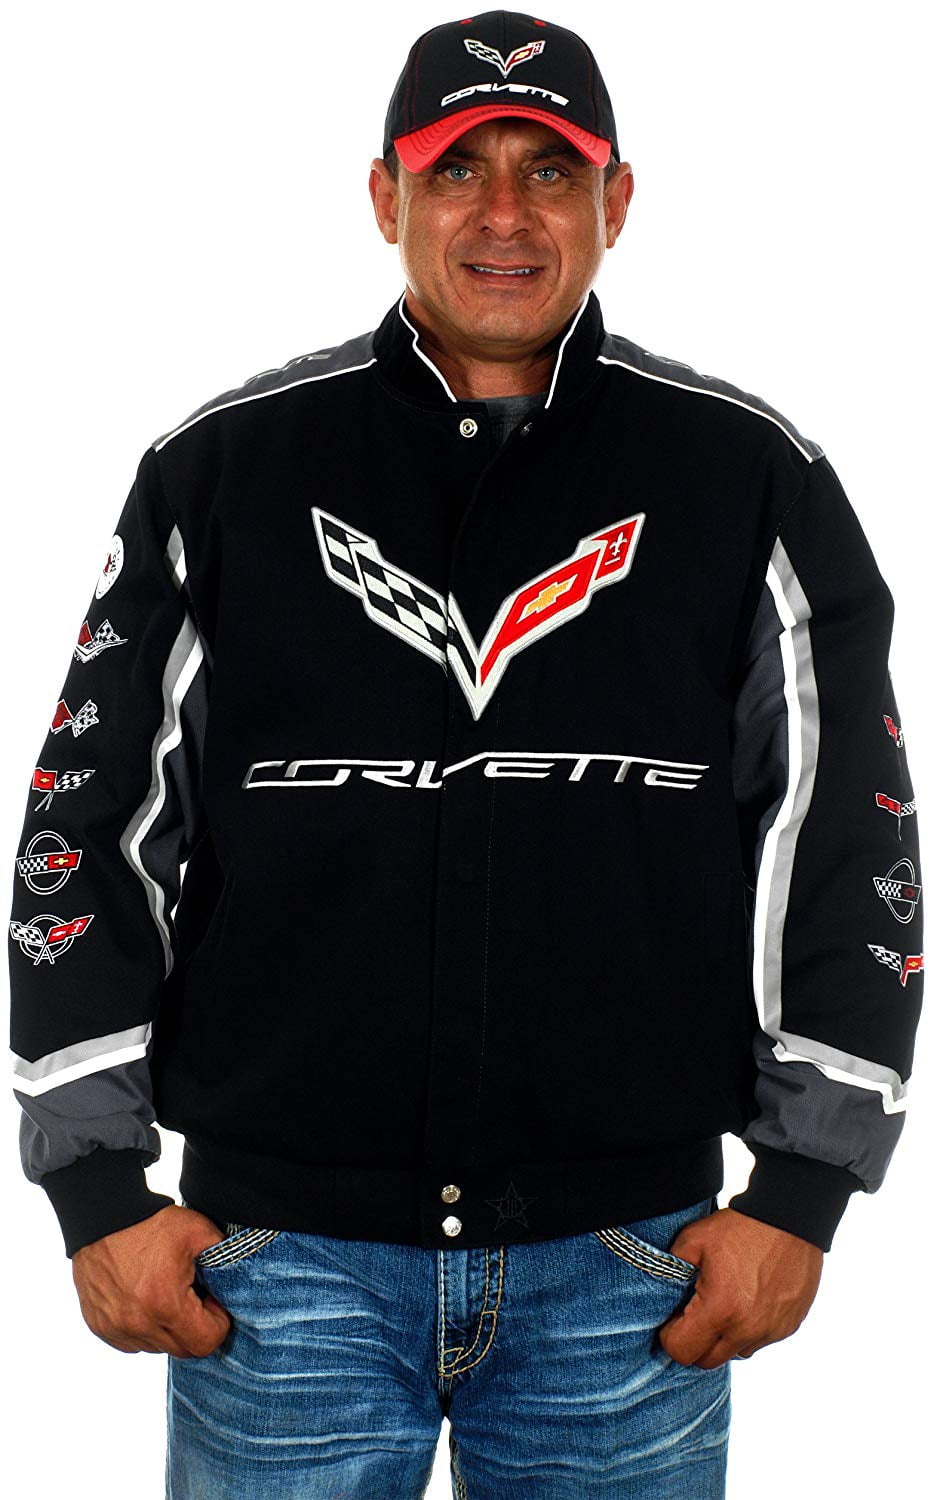 J.H Design Corvette Racing Embroidered Cotton Jacket Black Size XLarge 